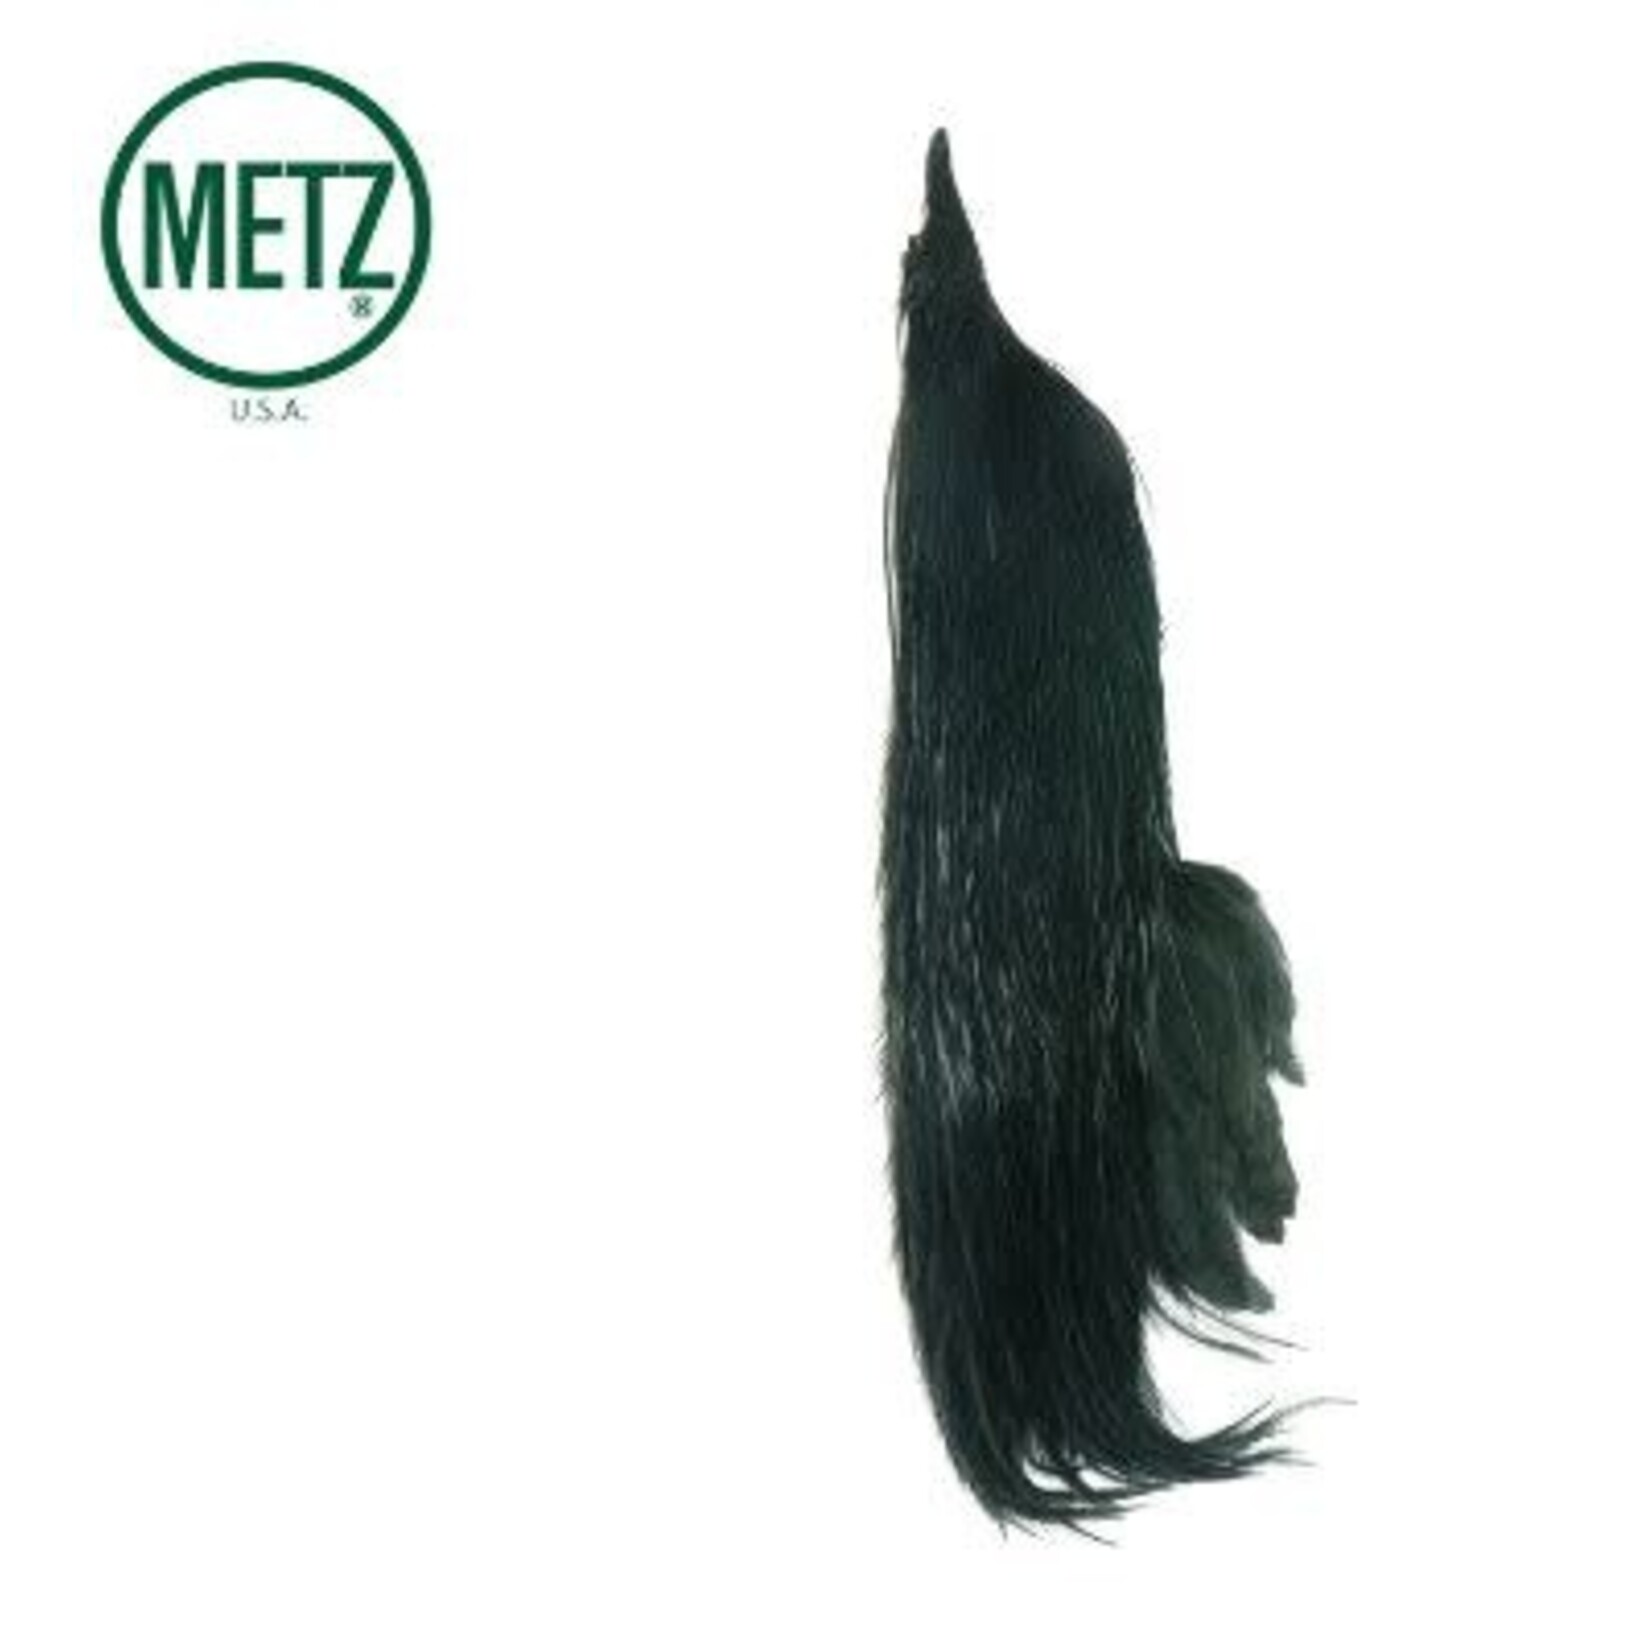 metz feathers METZ #3 HALF NECK BLACK DYED